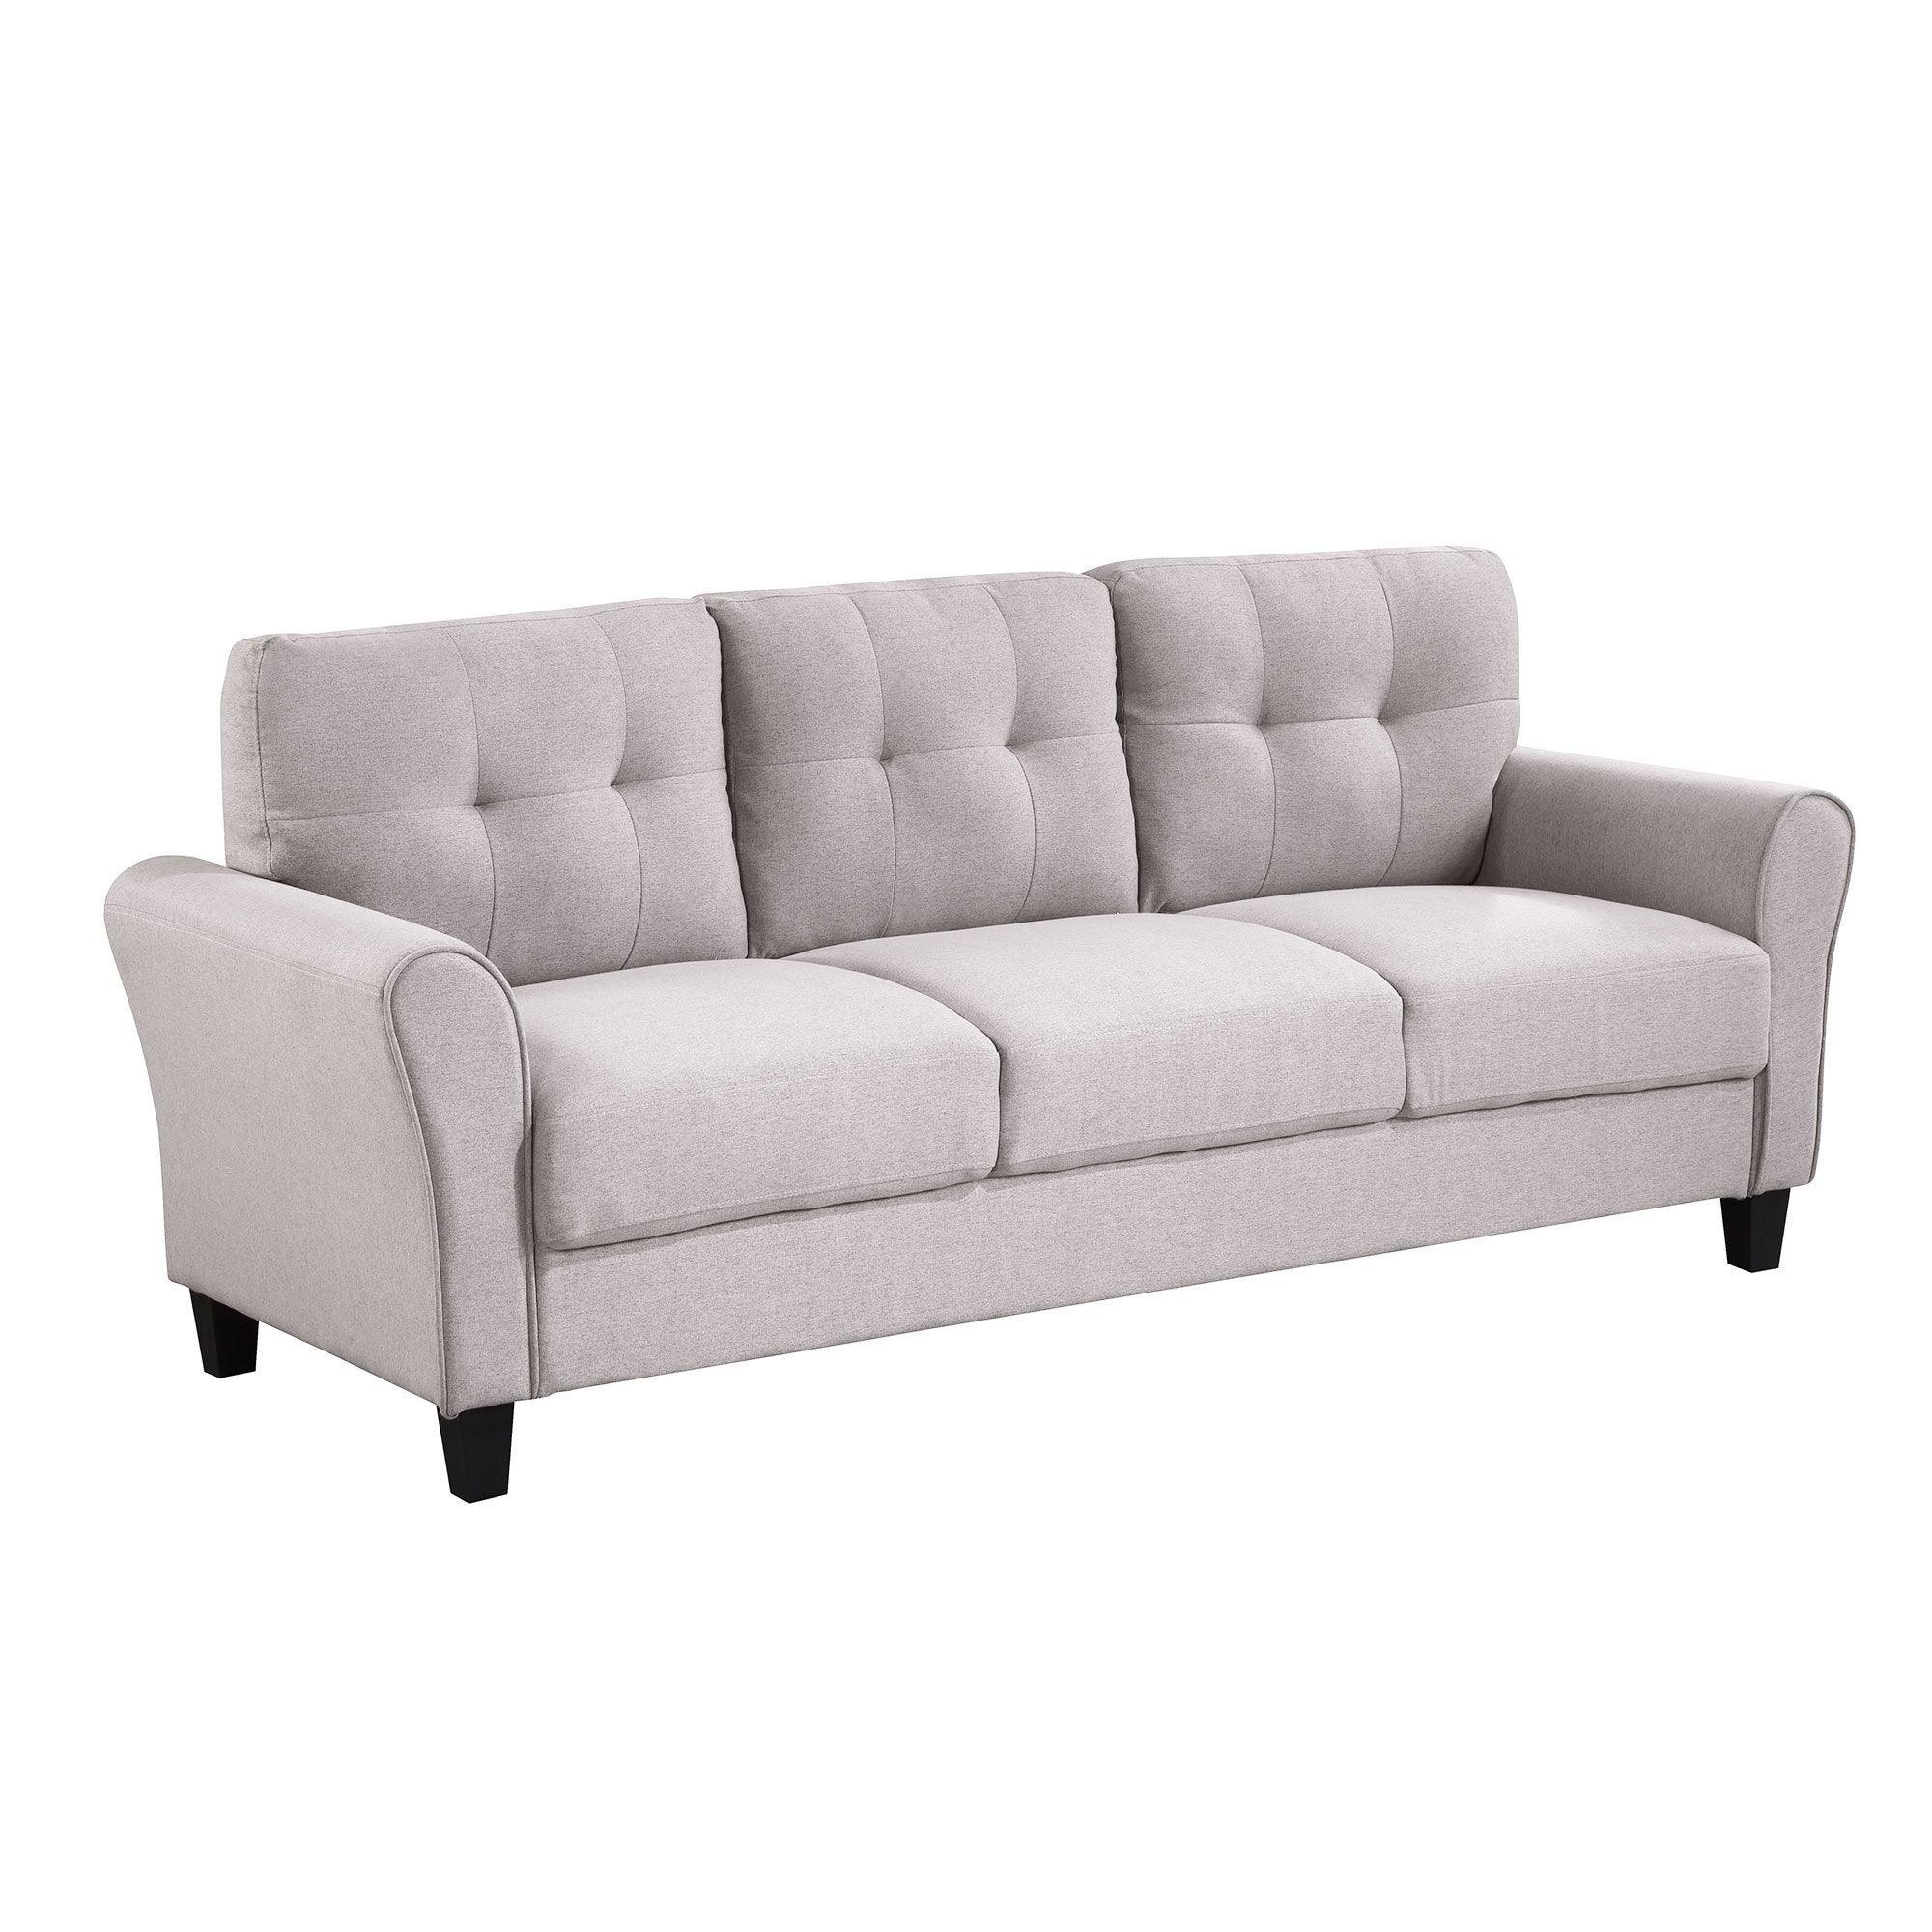 🆓🚛 79.9" Modern Living Room Sofa Linen Upholstered Couch Furniture for Home Or Office, Light Gray